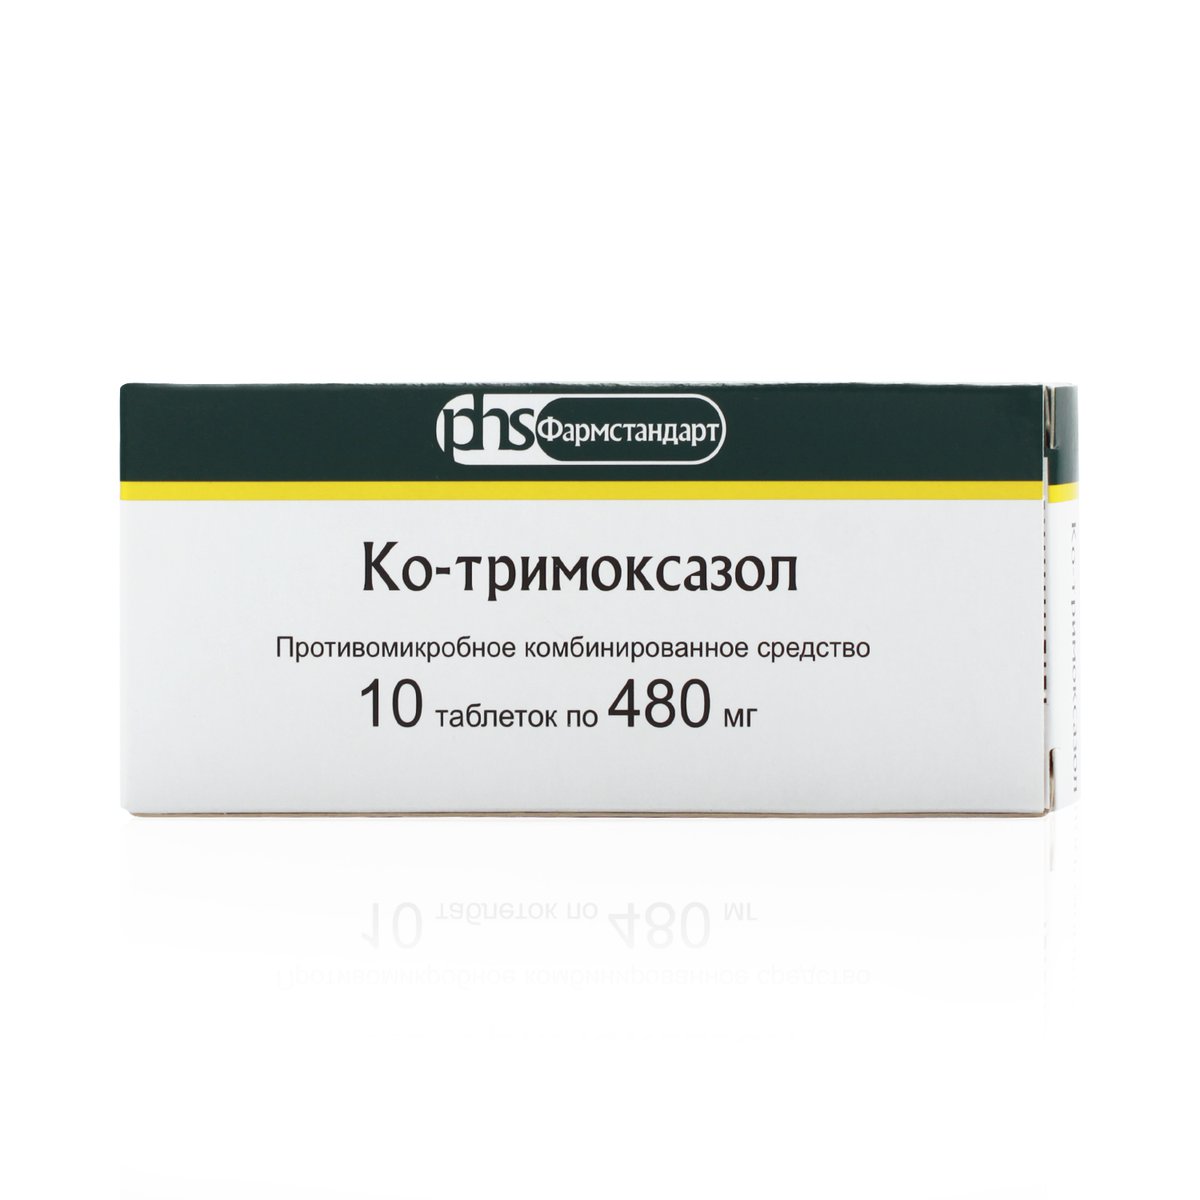 Ко-тримоксазол (таблетки, 10 шт, 480 мг) - цена,  онлайн  .